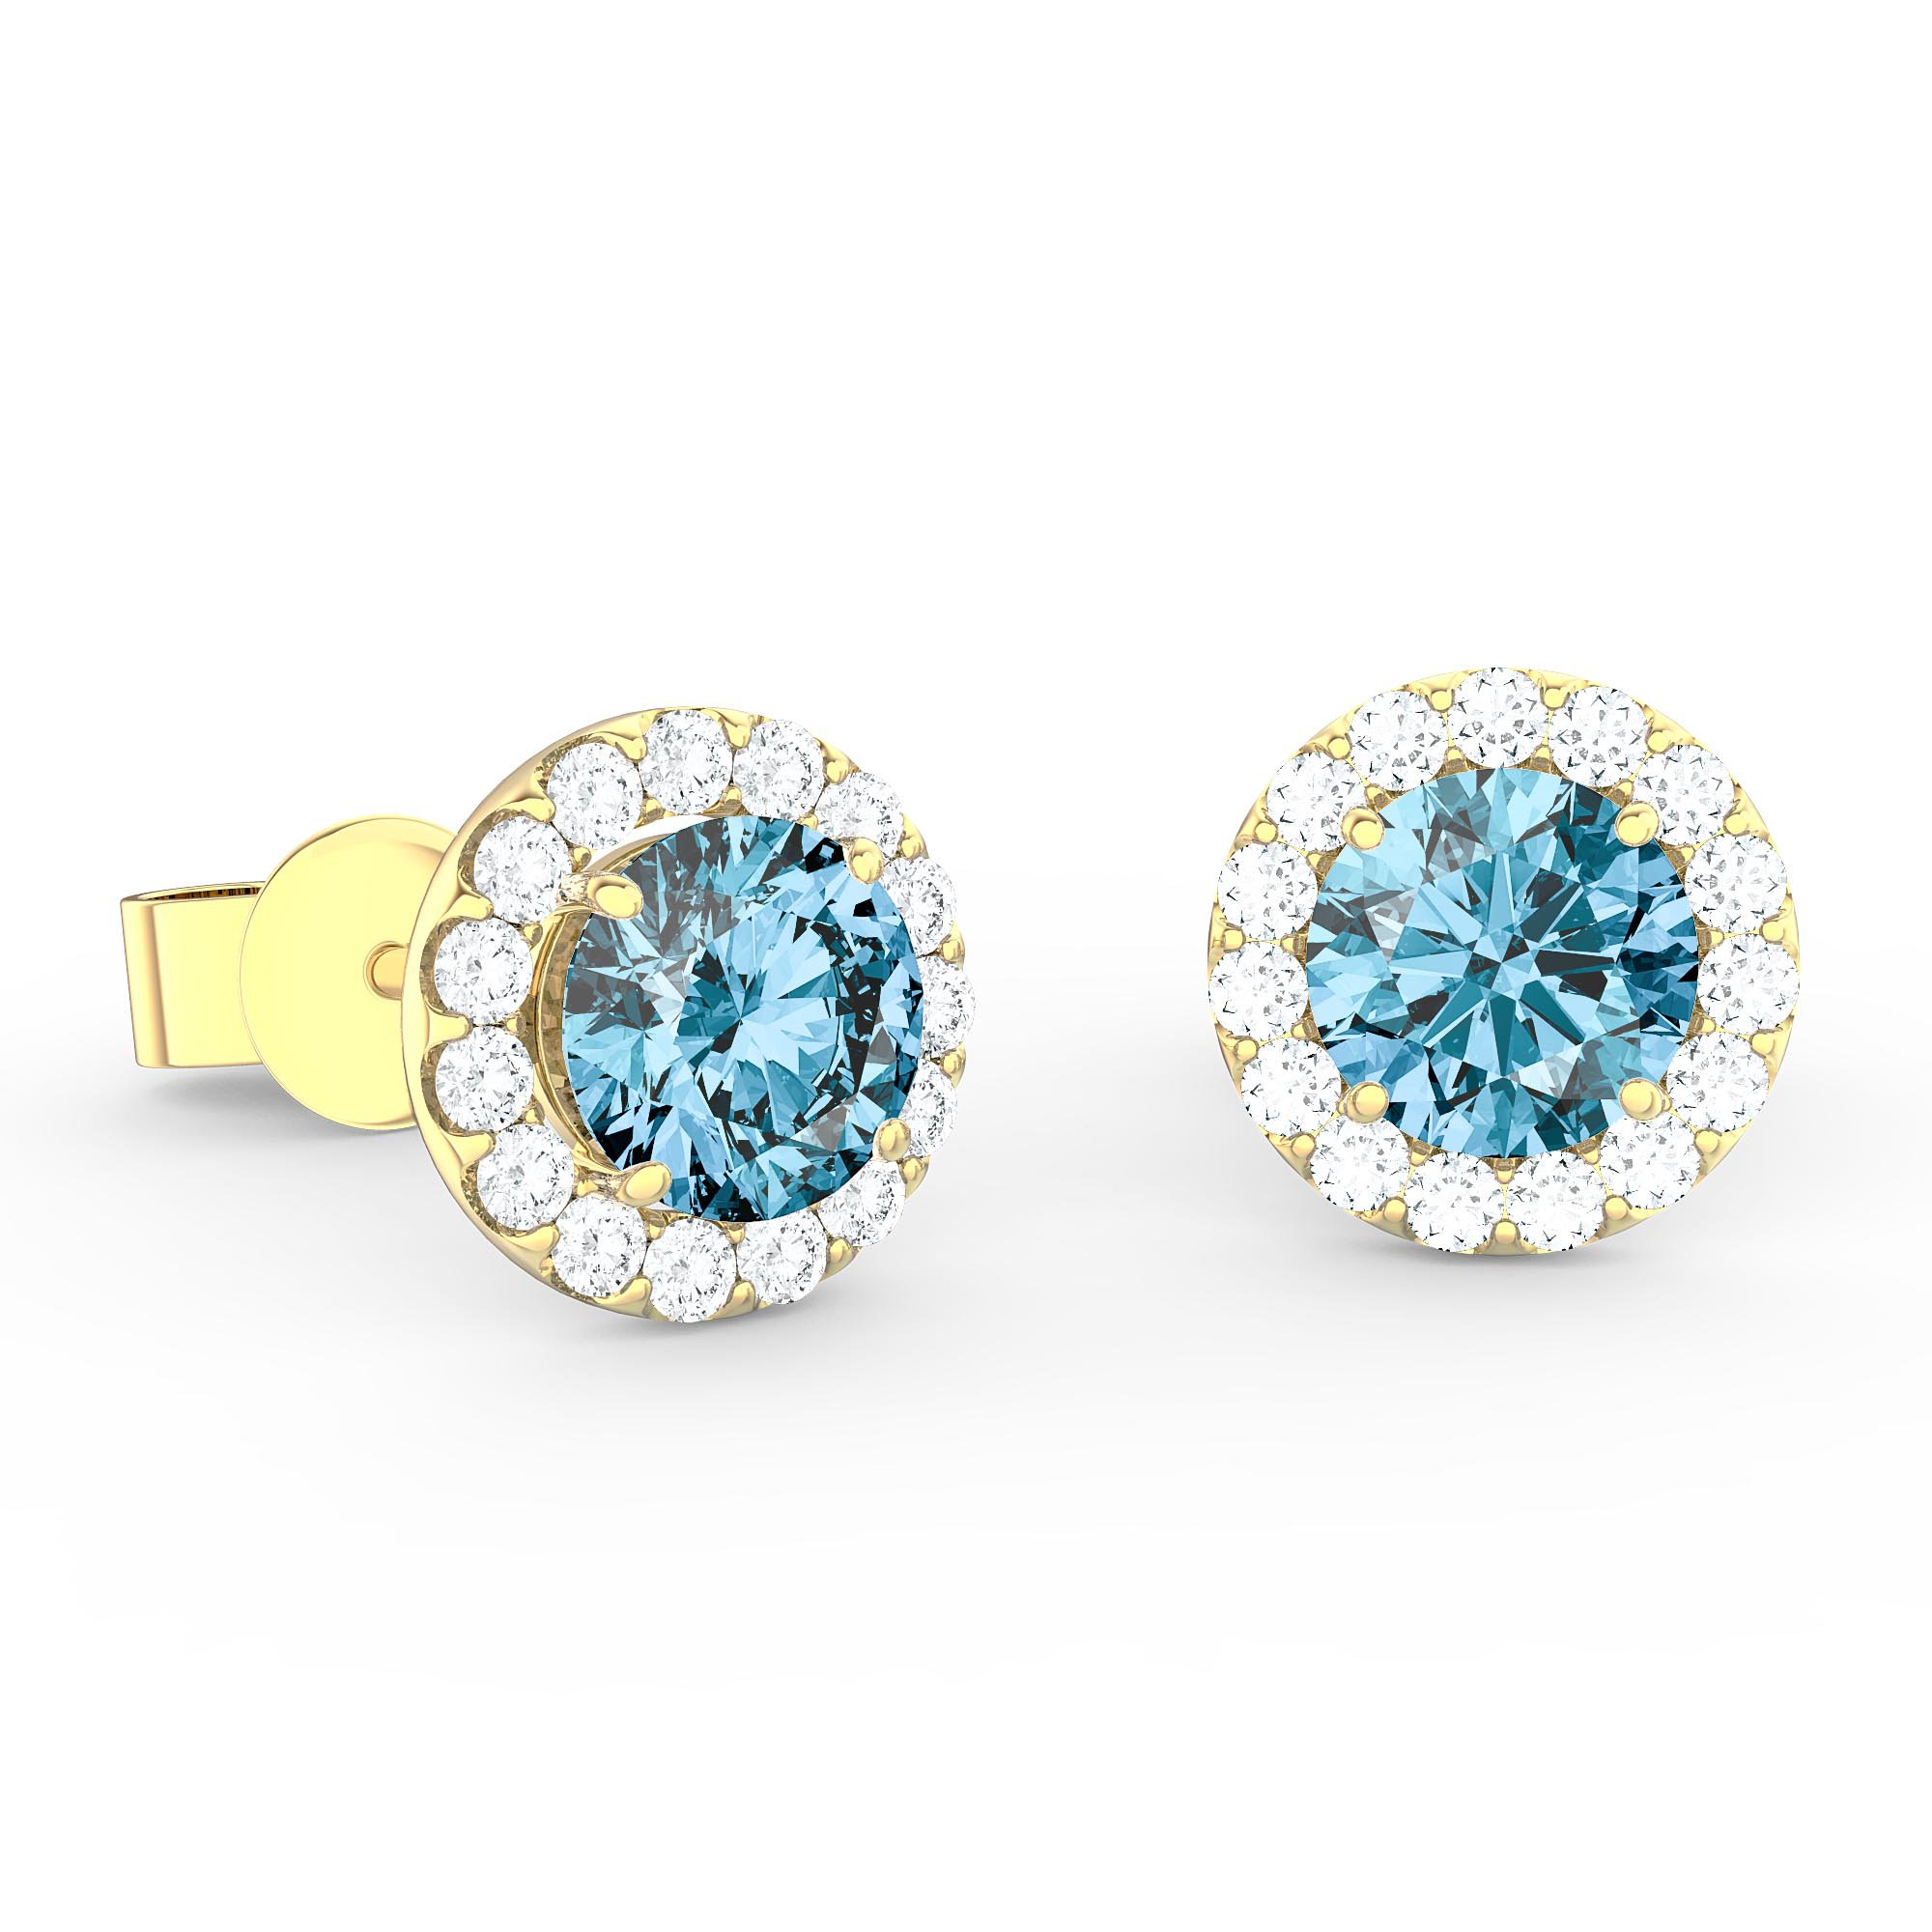 Sky Blue Topaz Earrings For Women Cubic Zirconia Earrings Sterling Silver 925 Meteor elegant Stud November Birthstone Yellow Gold Plated